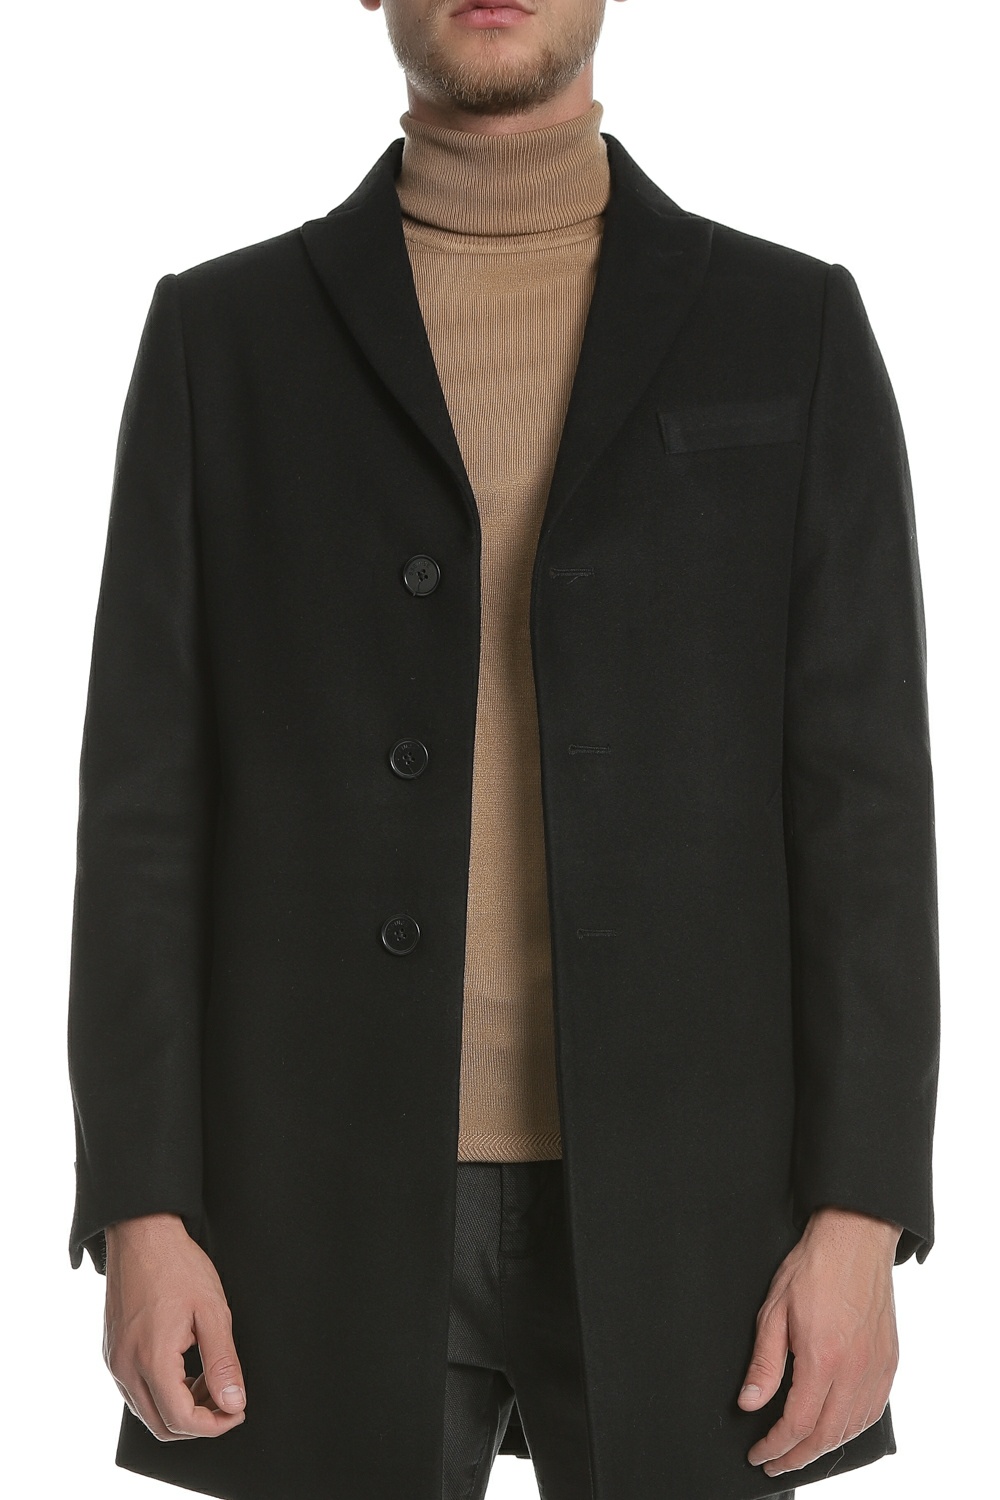 SSEINSE - Ανδρικό παλτό SSEINSE μαύρο Ανδρικά/Ρούχα/Πανωφόρια/Παλτό